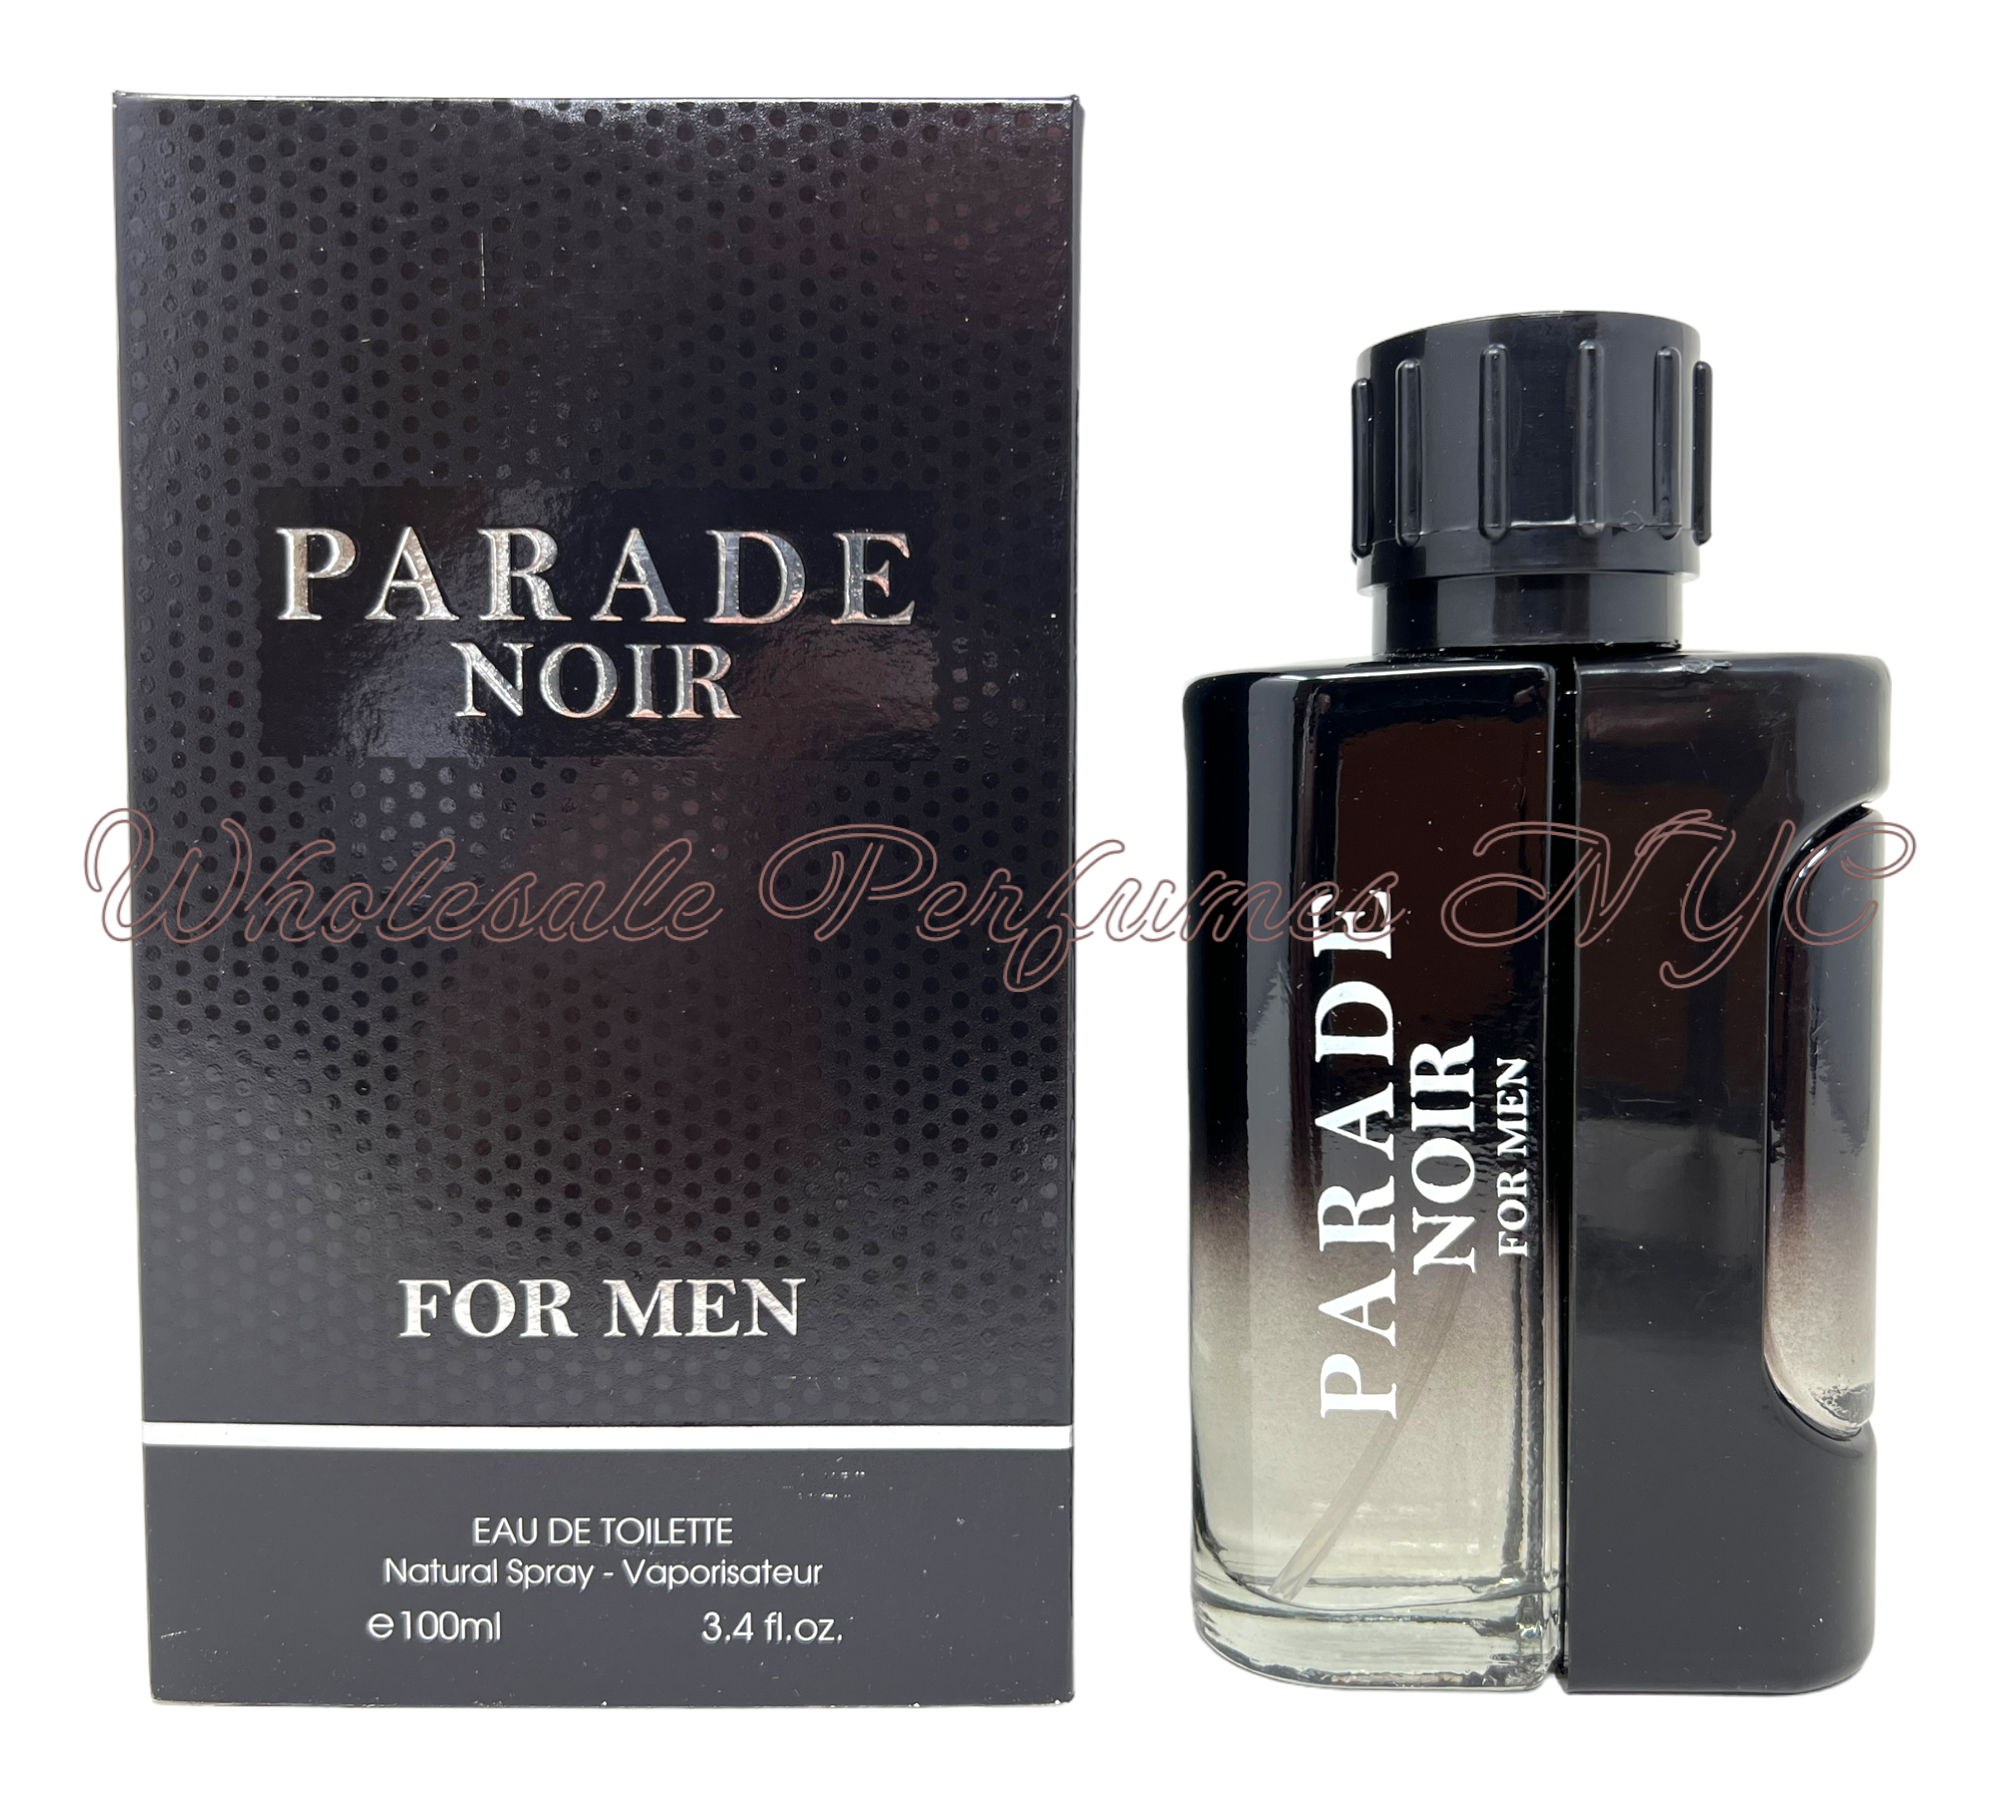 Parade Noir for Men – Wholesale Perfumes NYC